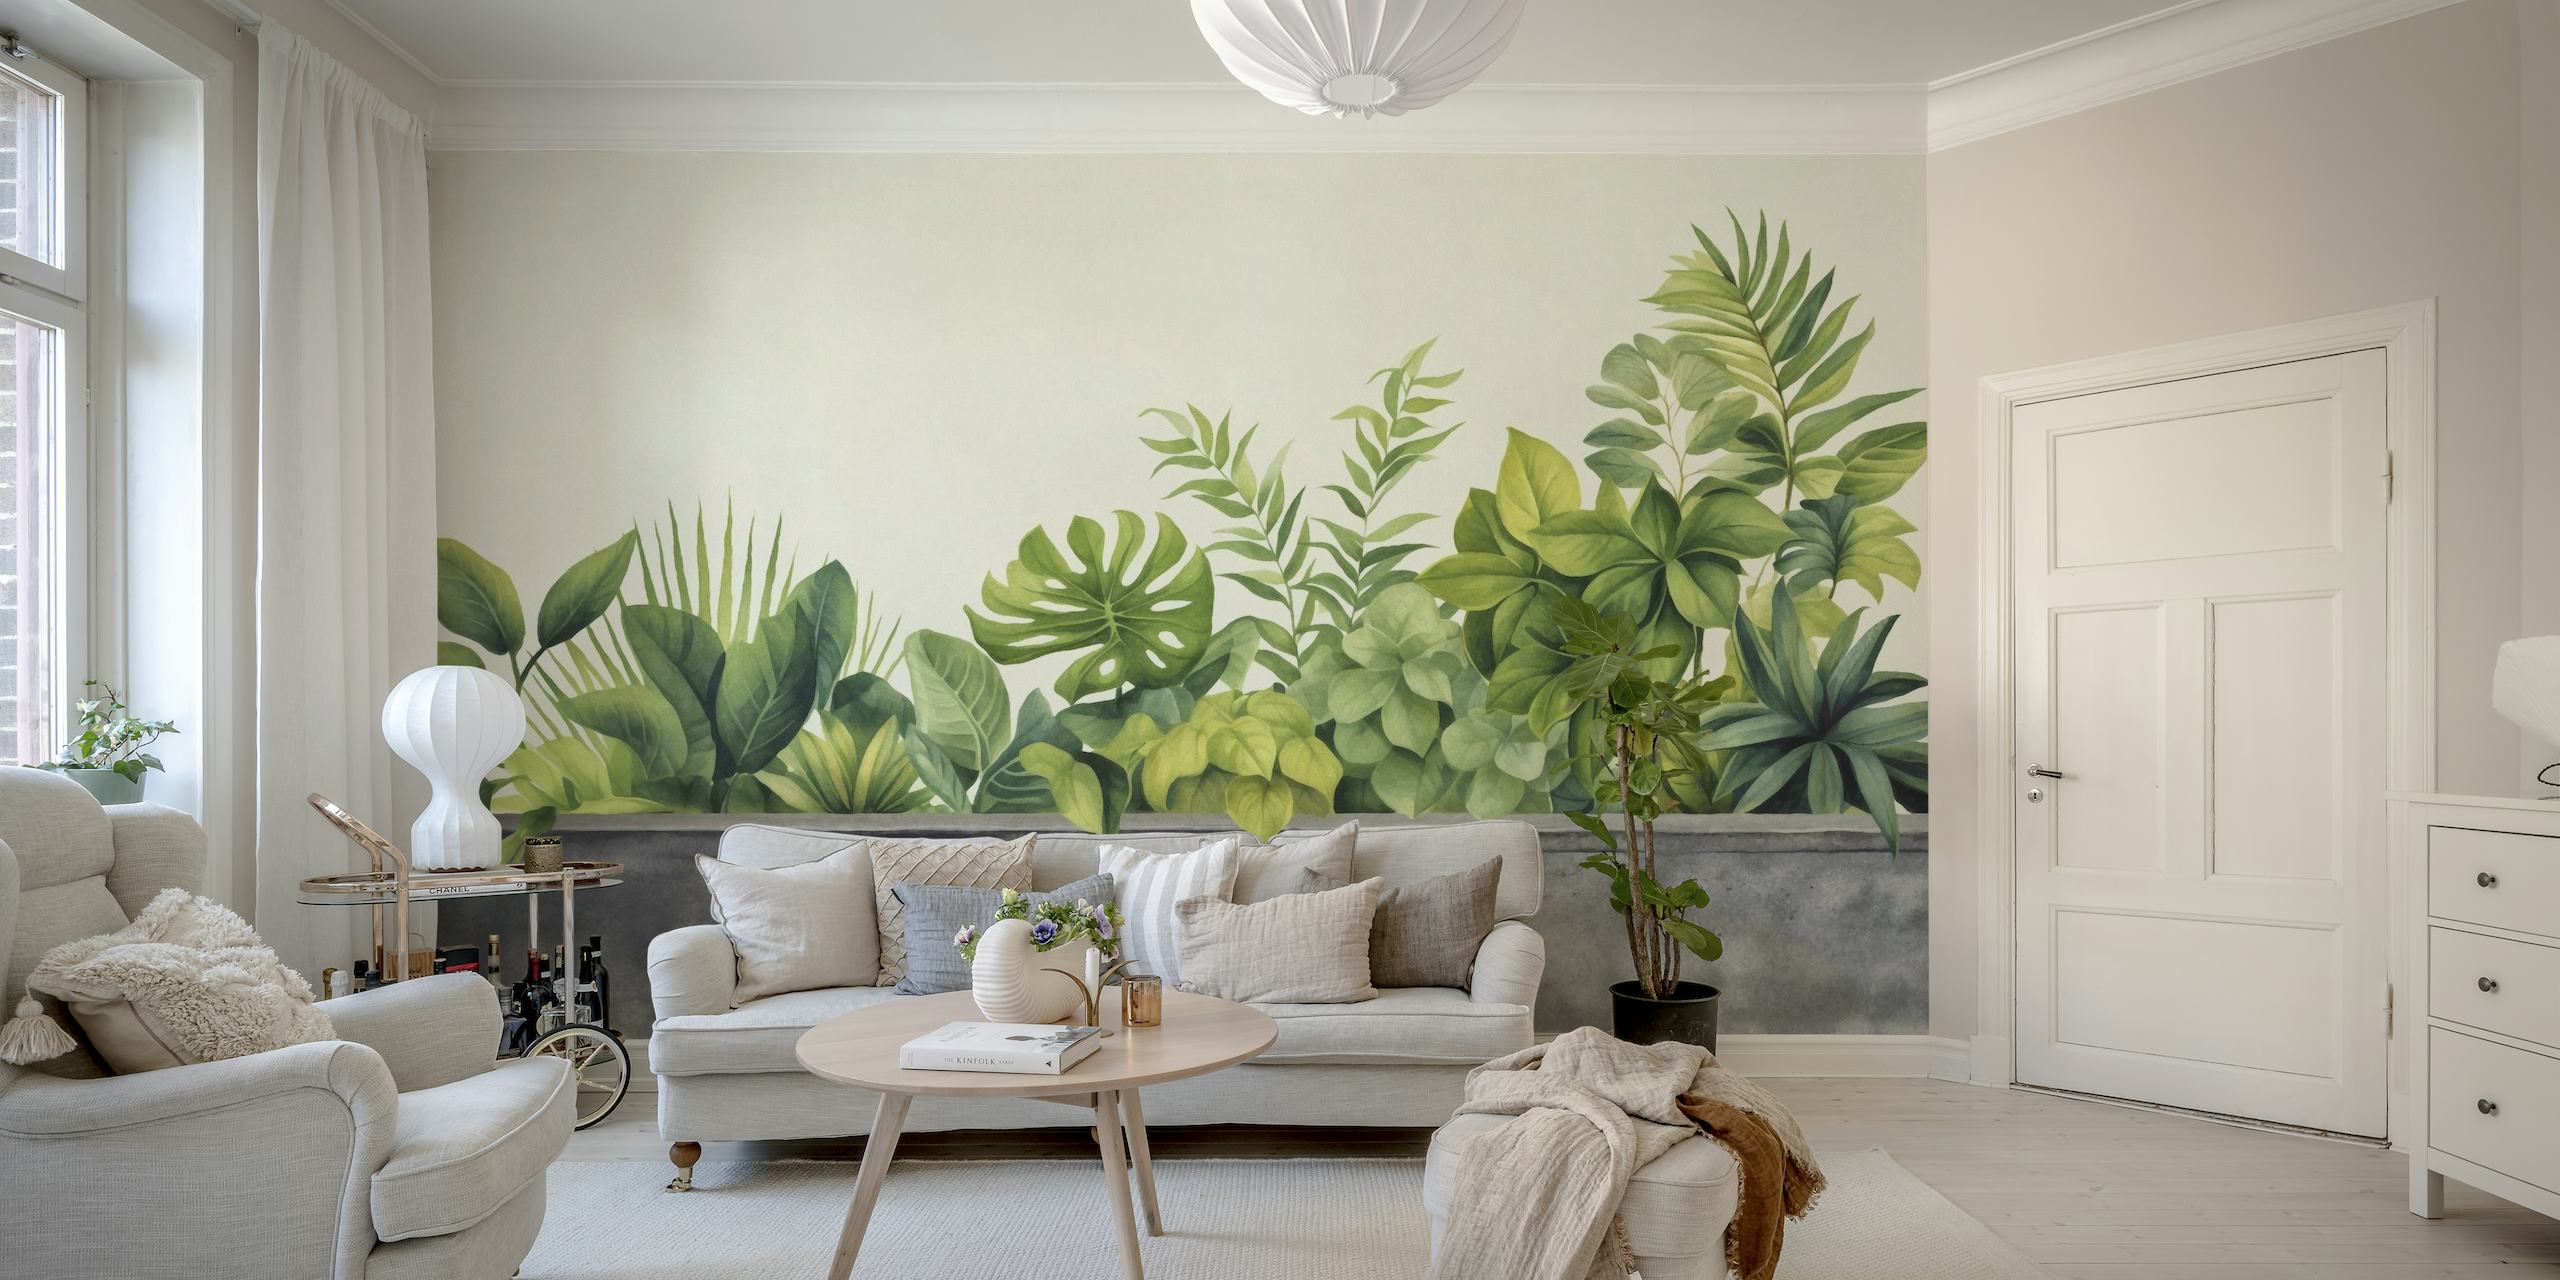 Mural de pared de acuarela verde tropical de jardinería urbana con follaje exuberante sobre fondo gris